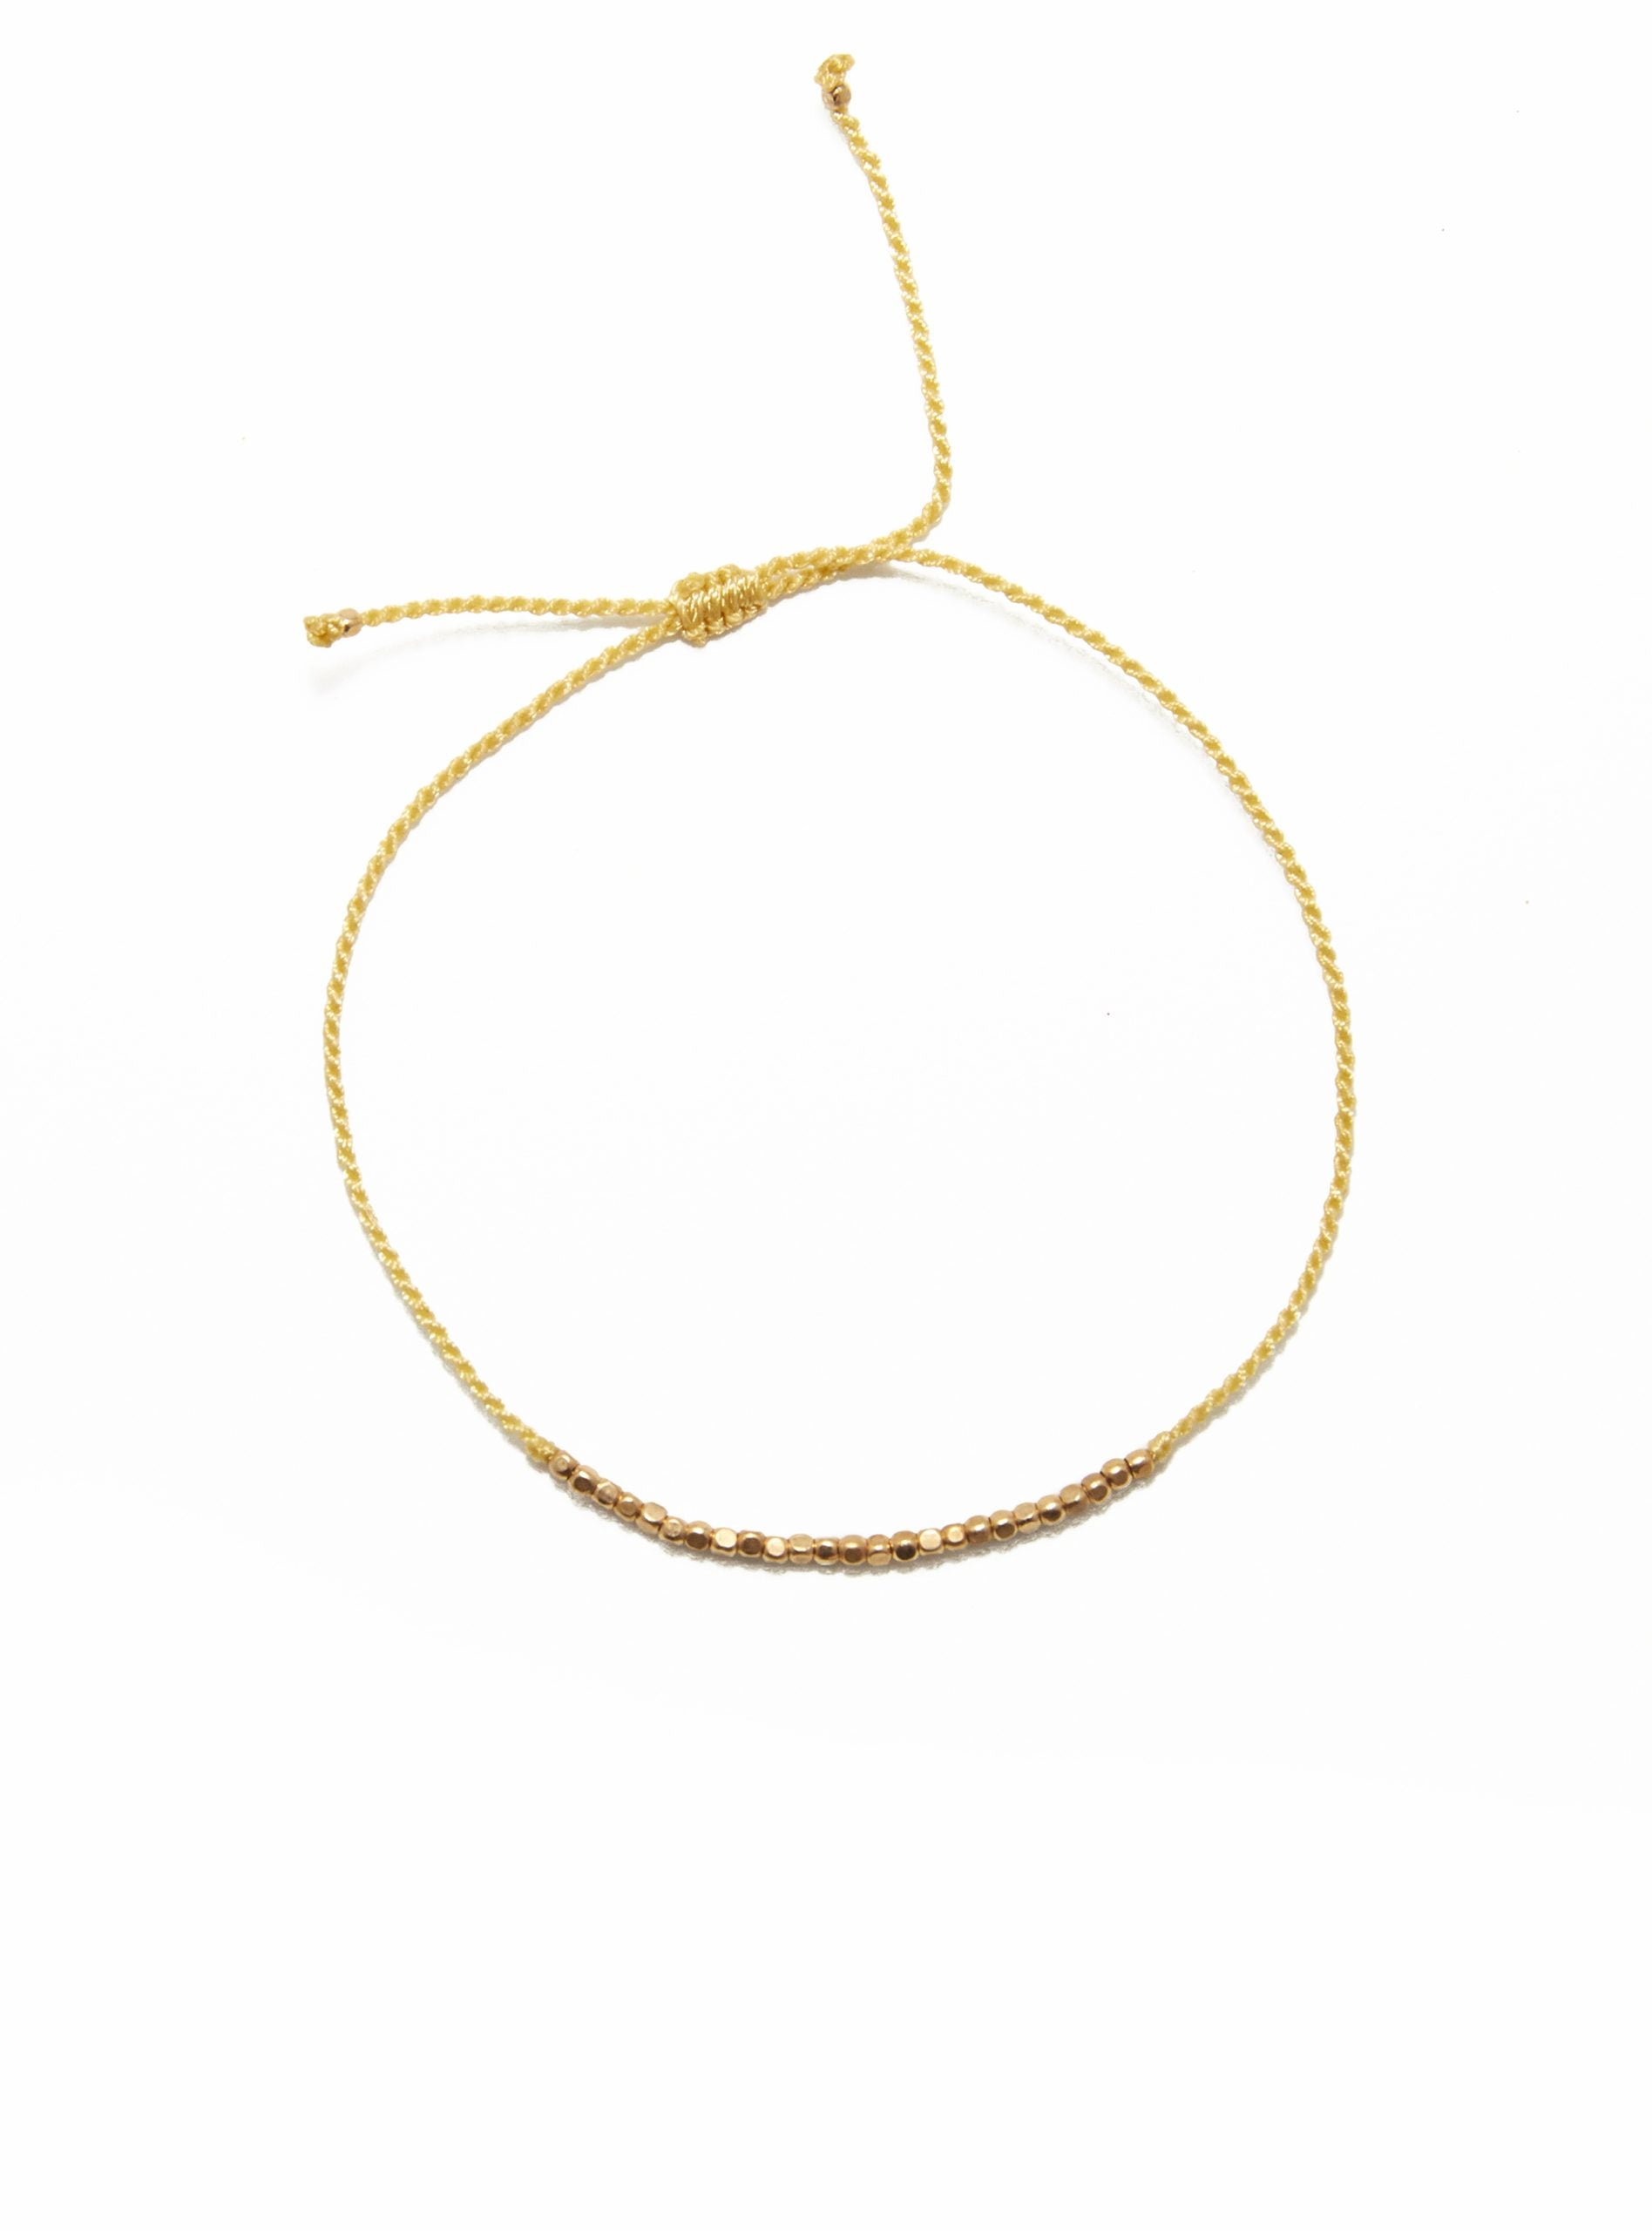 Flori Bracelet Gold - Beads Yellow